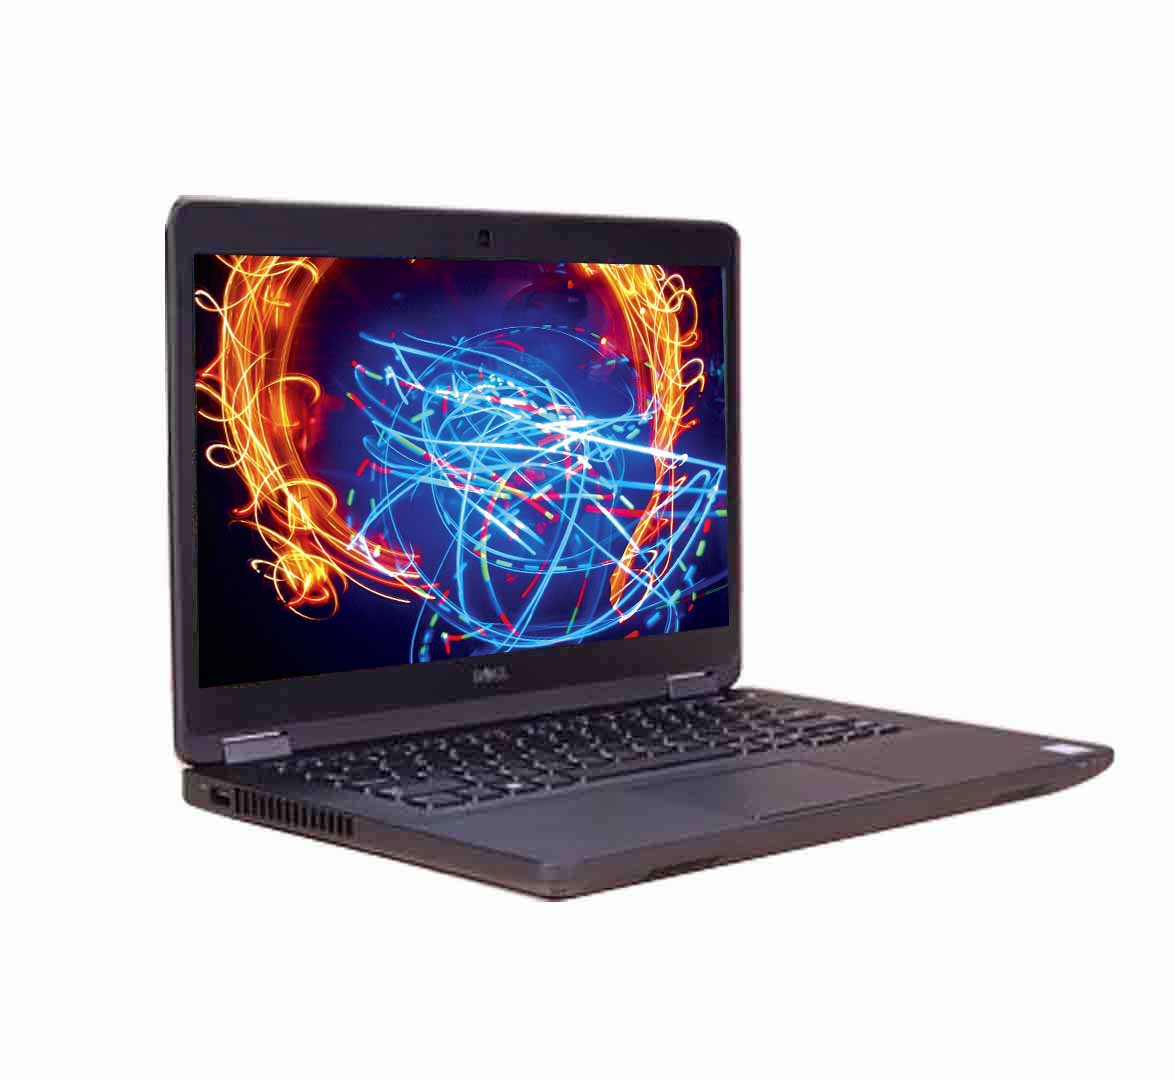 Dell Latitude E5470 Business Laptop, Intel Core i7-6th Gen CPU, 16GB RAM, 512GB SSD, 14 inch Touchscreen, Windows 10 Pro, Refurbished Laptop